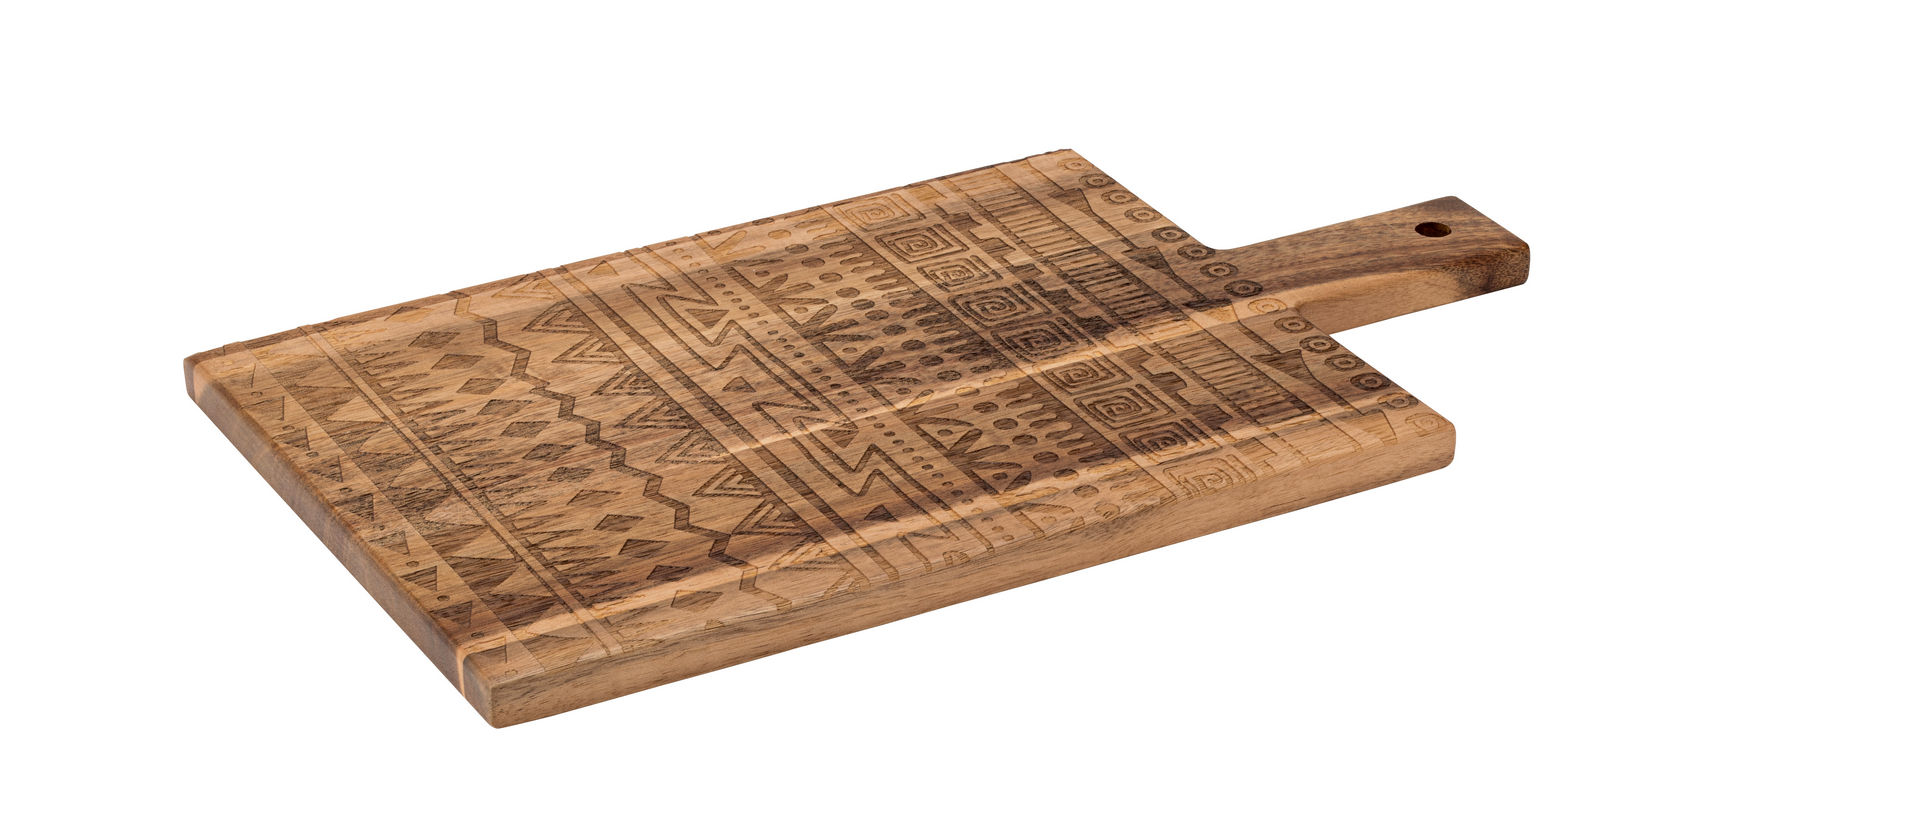 Tribal Handled Wood 35 x 20cm - JMP806-000000-B01006 (Pack of 6)